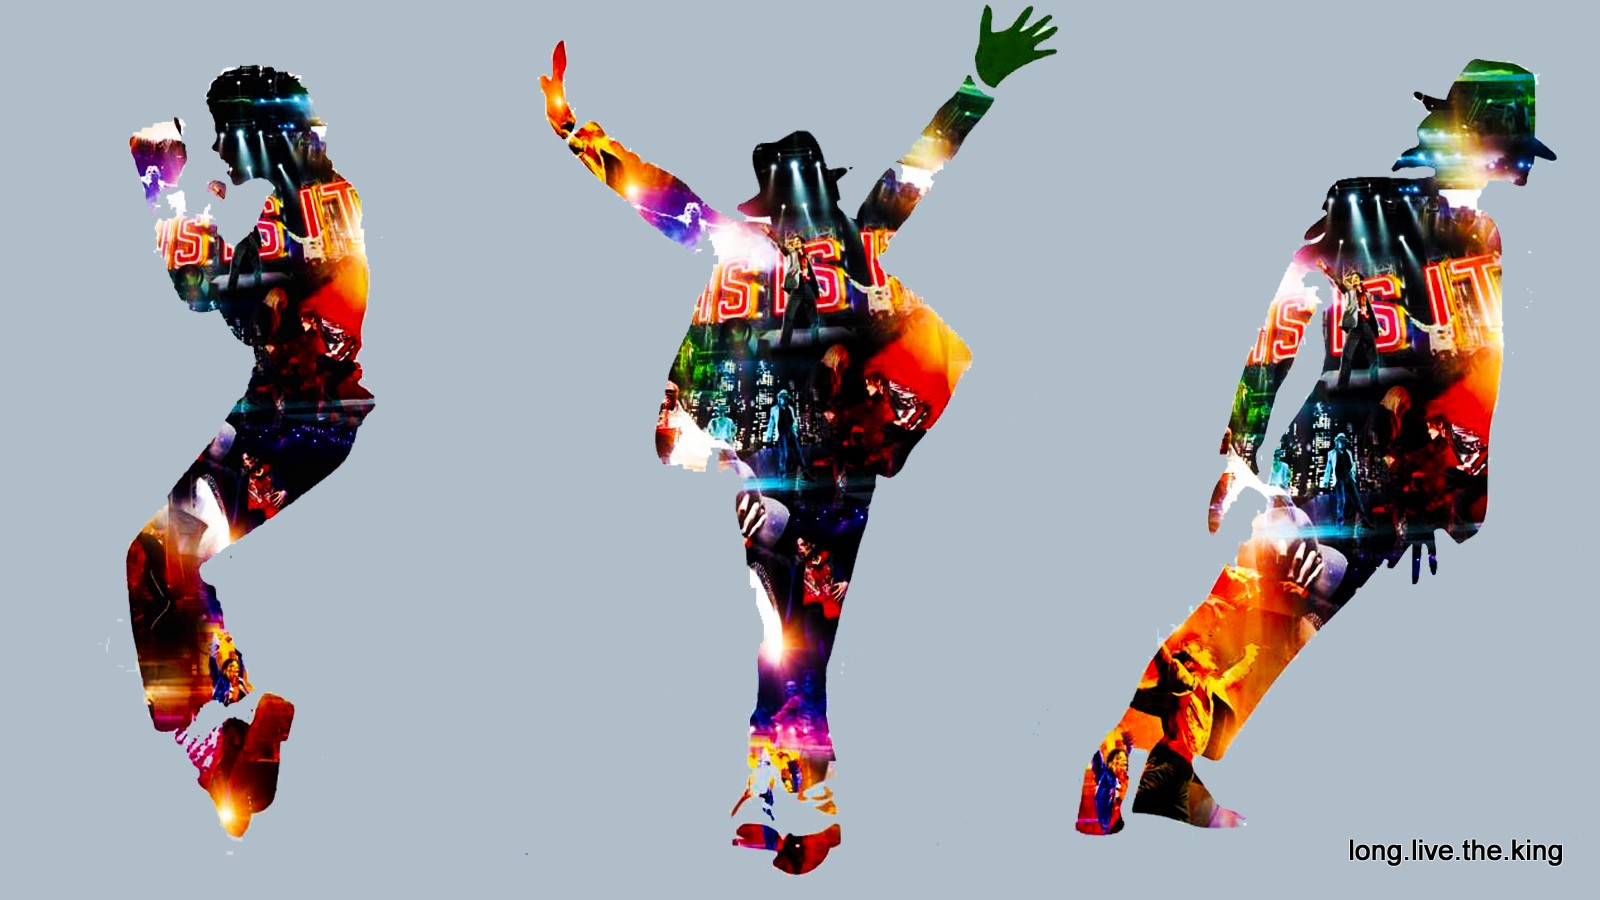 Michael Jackson Wallpaper HD 2020 APK 21.0 - Download APK latest version